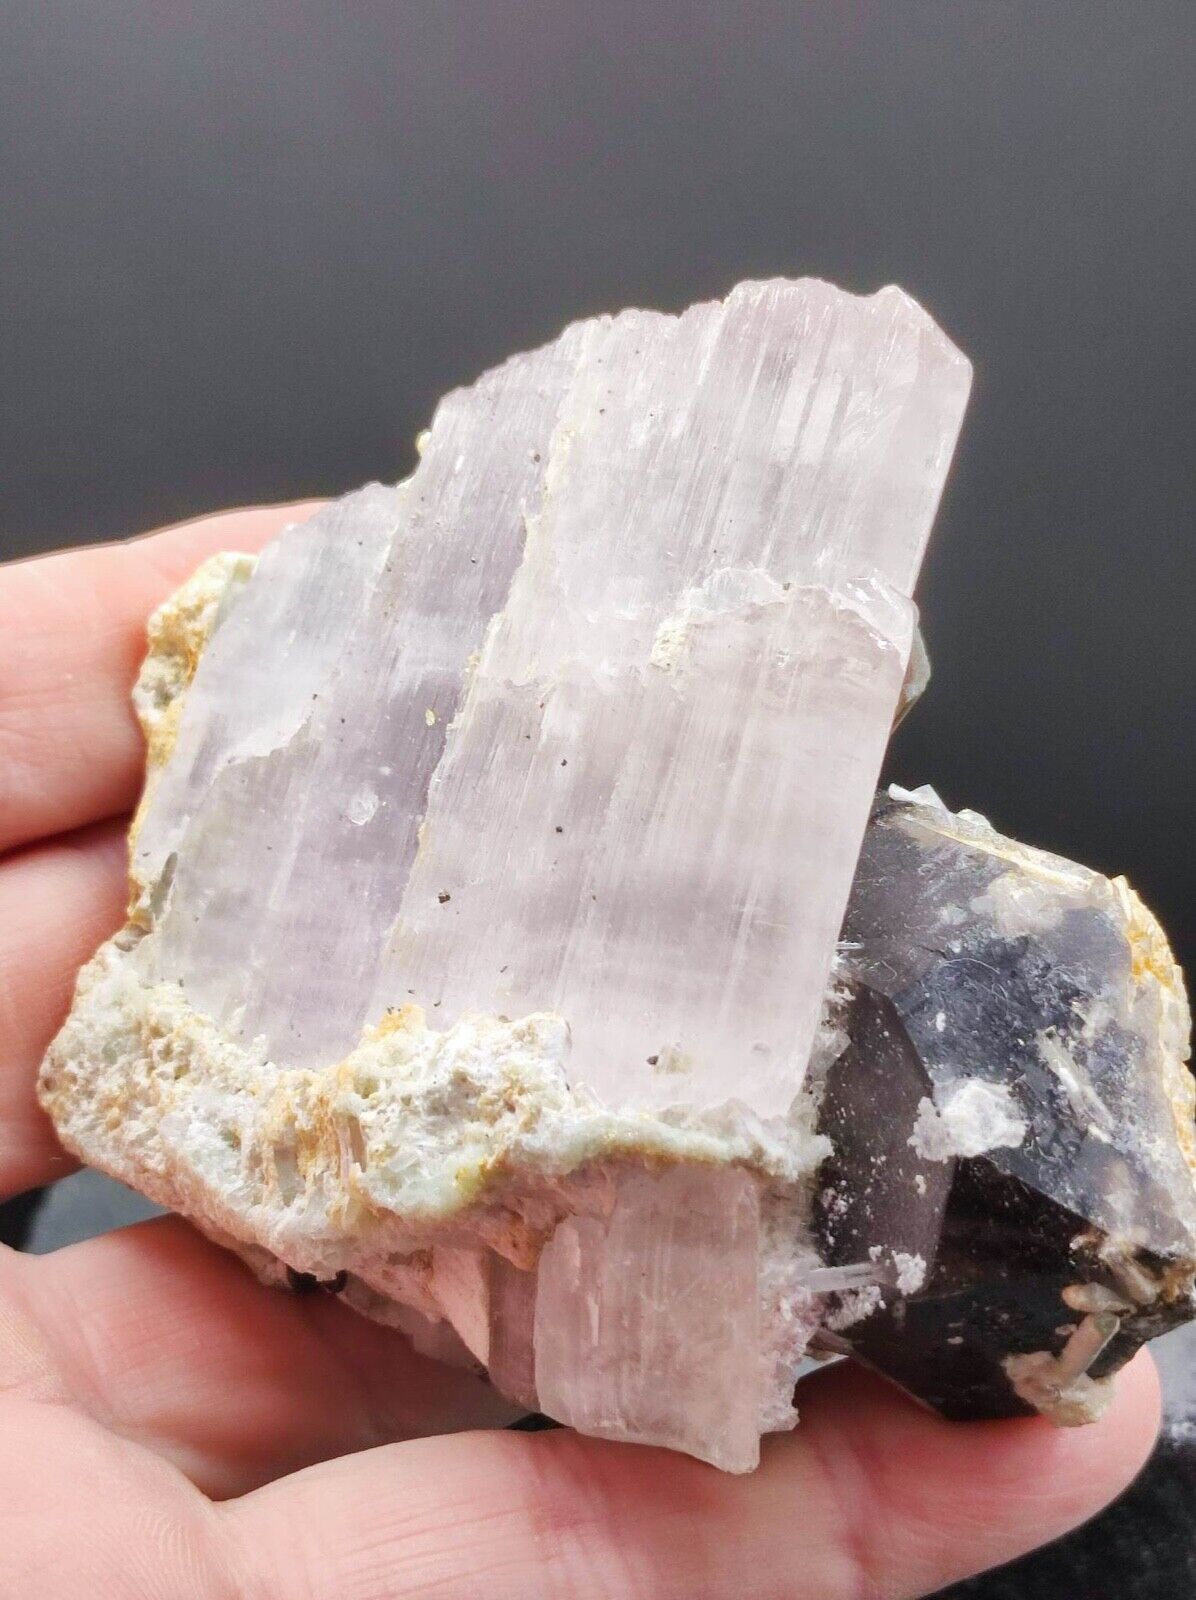 Top RARE Purple Kunzite Crystal + Morion Quartz